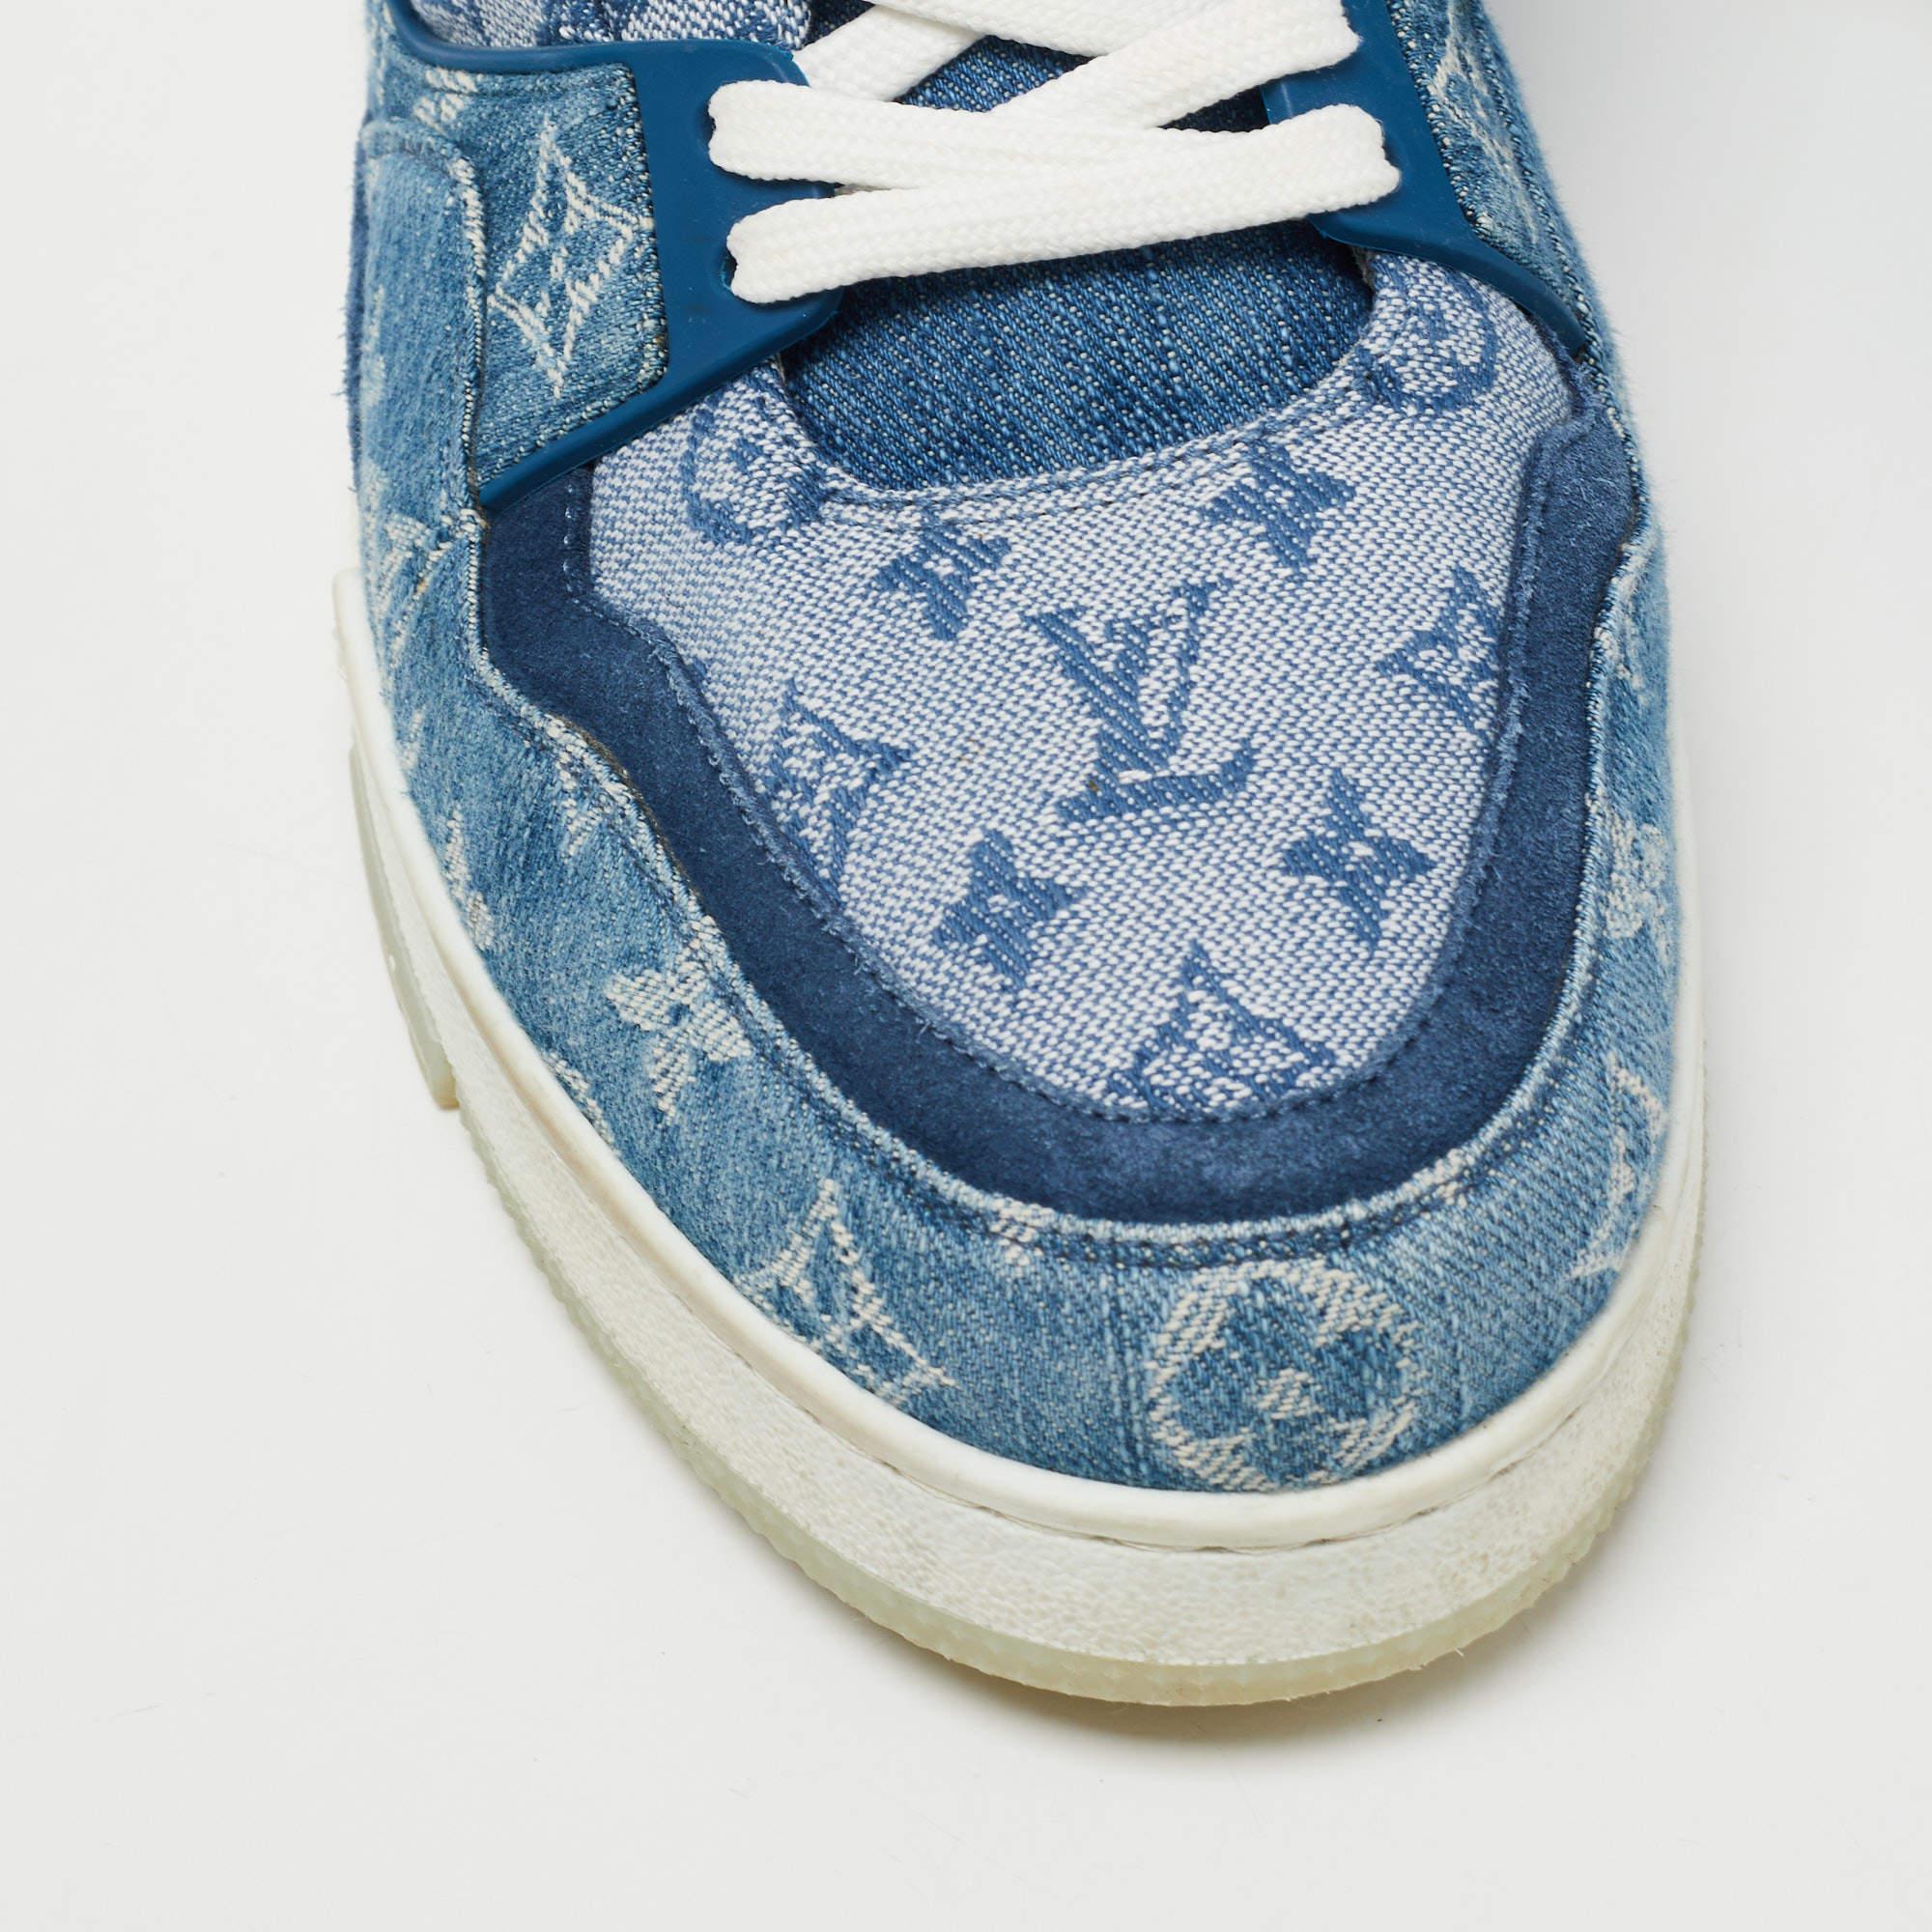 Men's Louis Vuitton Blue Suede and Monogram Denim LV Trainer Sneakers Size 44.5